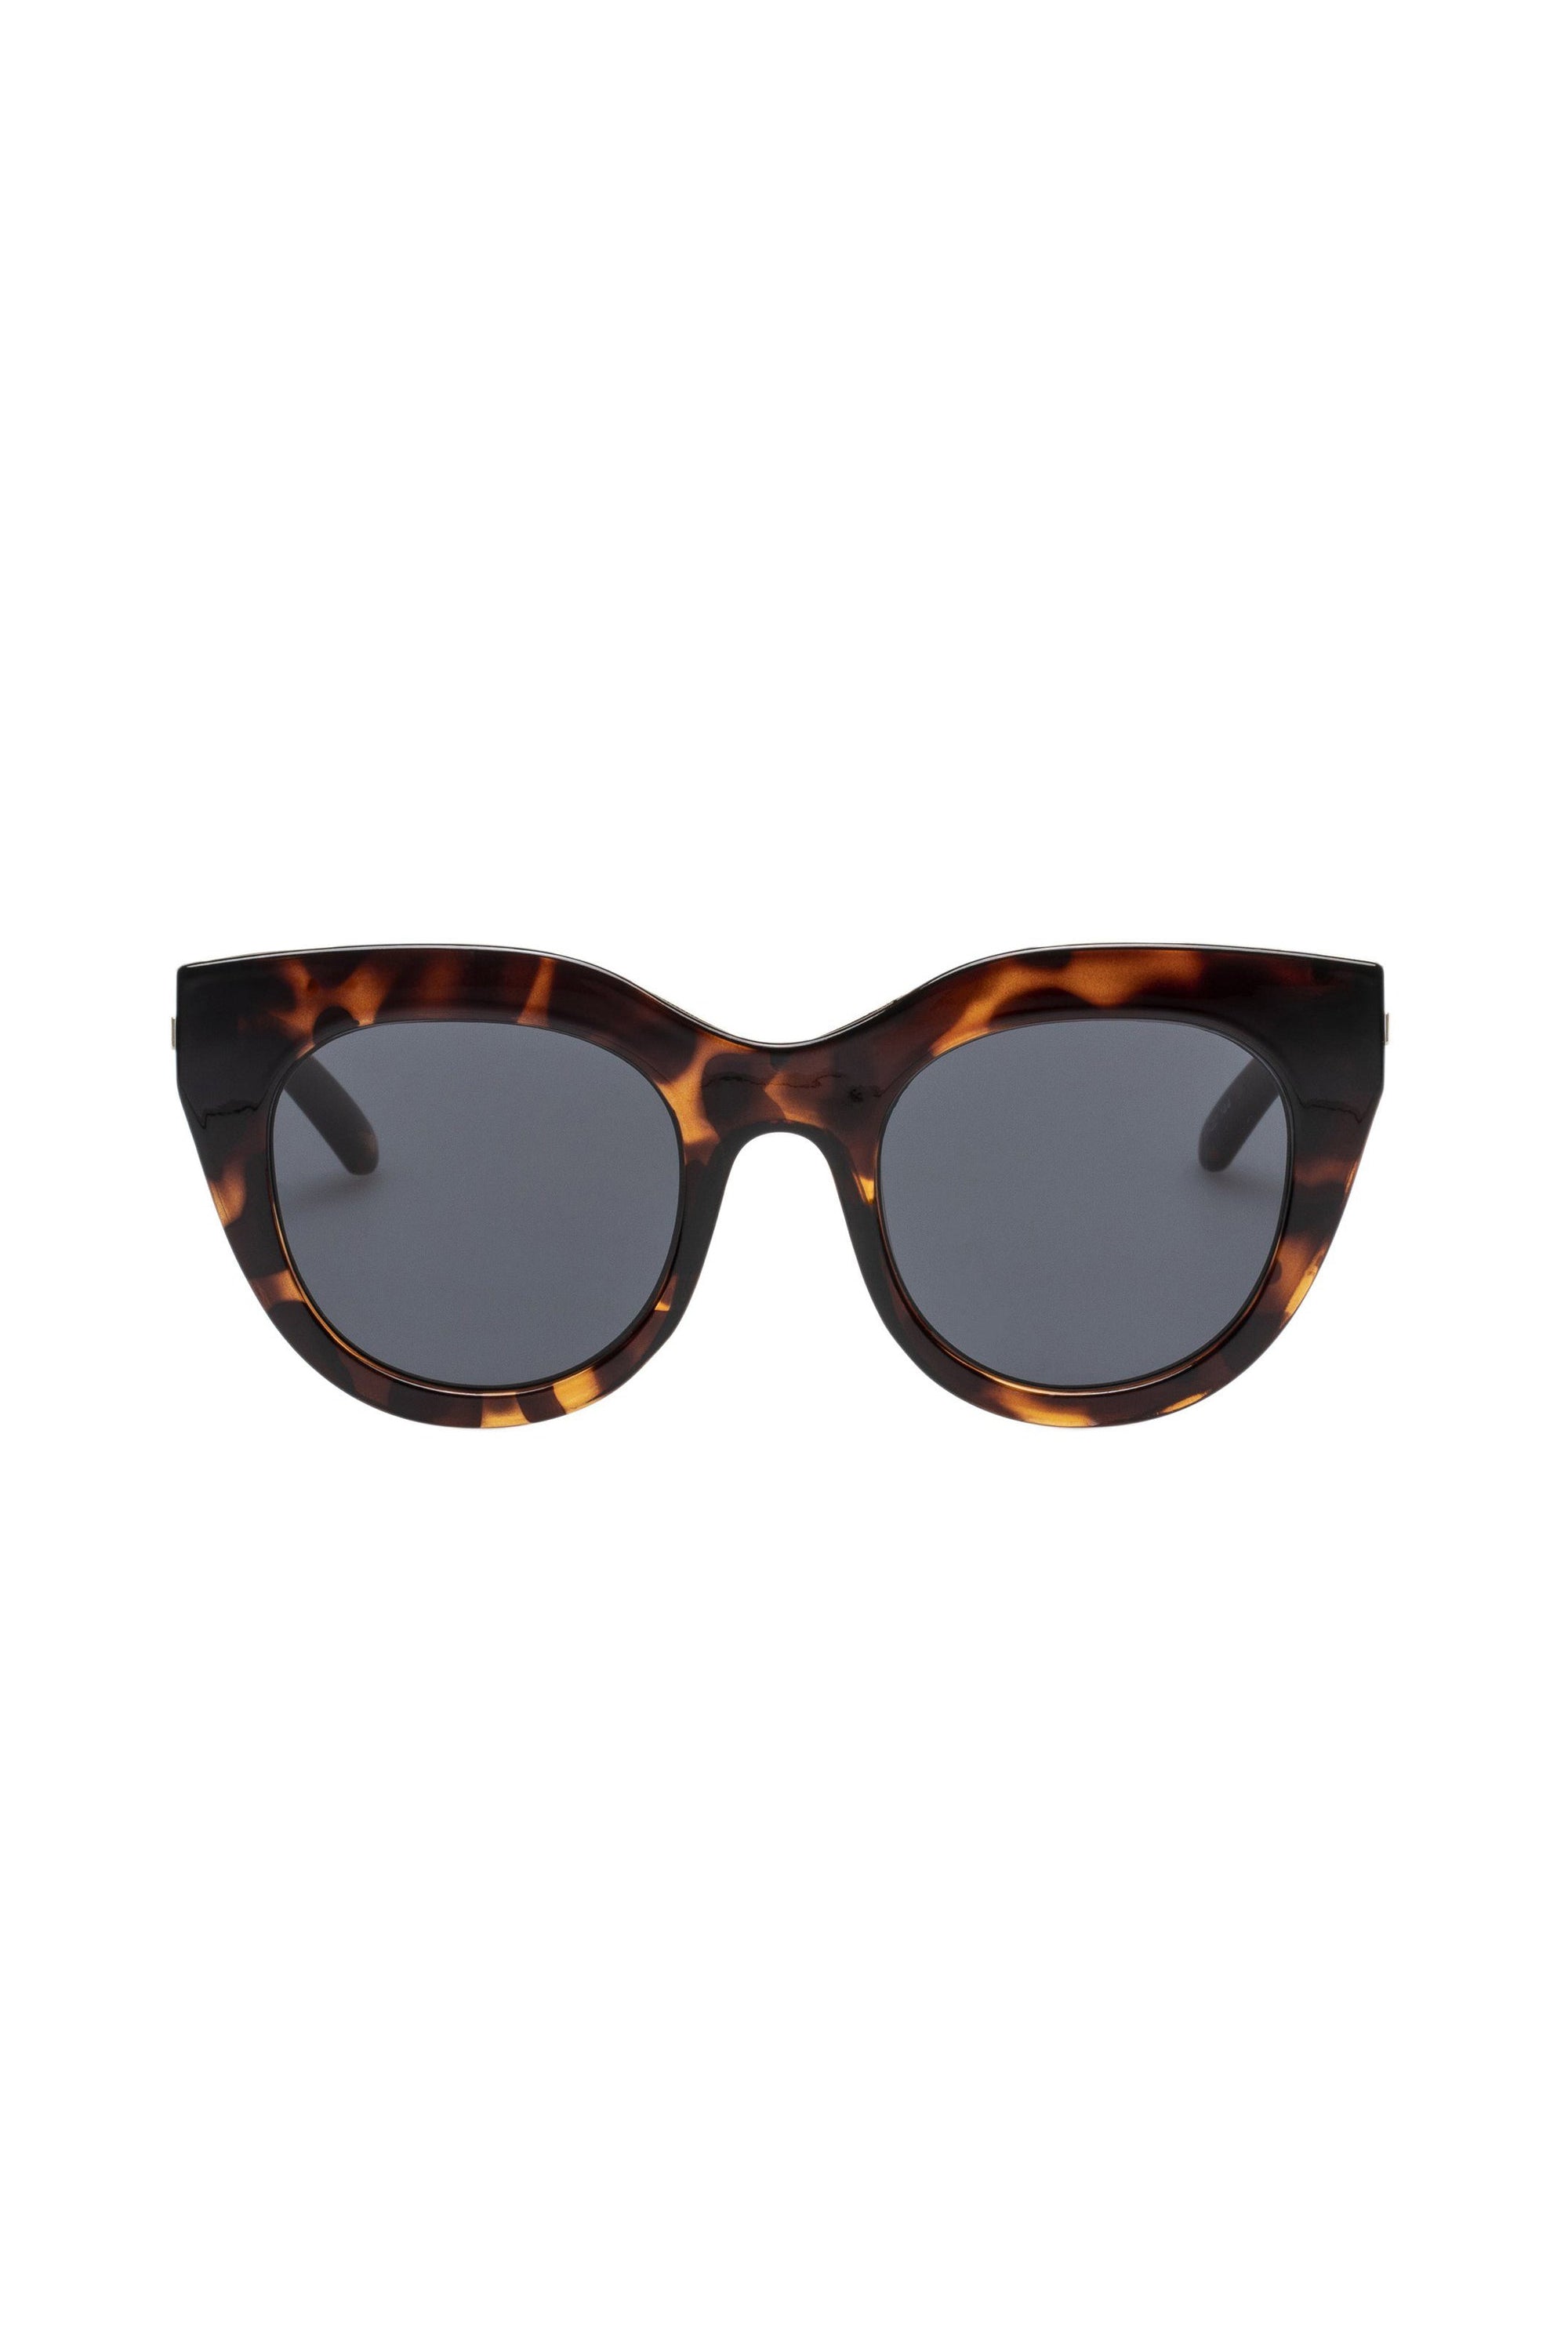 Le Specs Air Heart Sunglasses - Tortoise - RUM Amsterdam